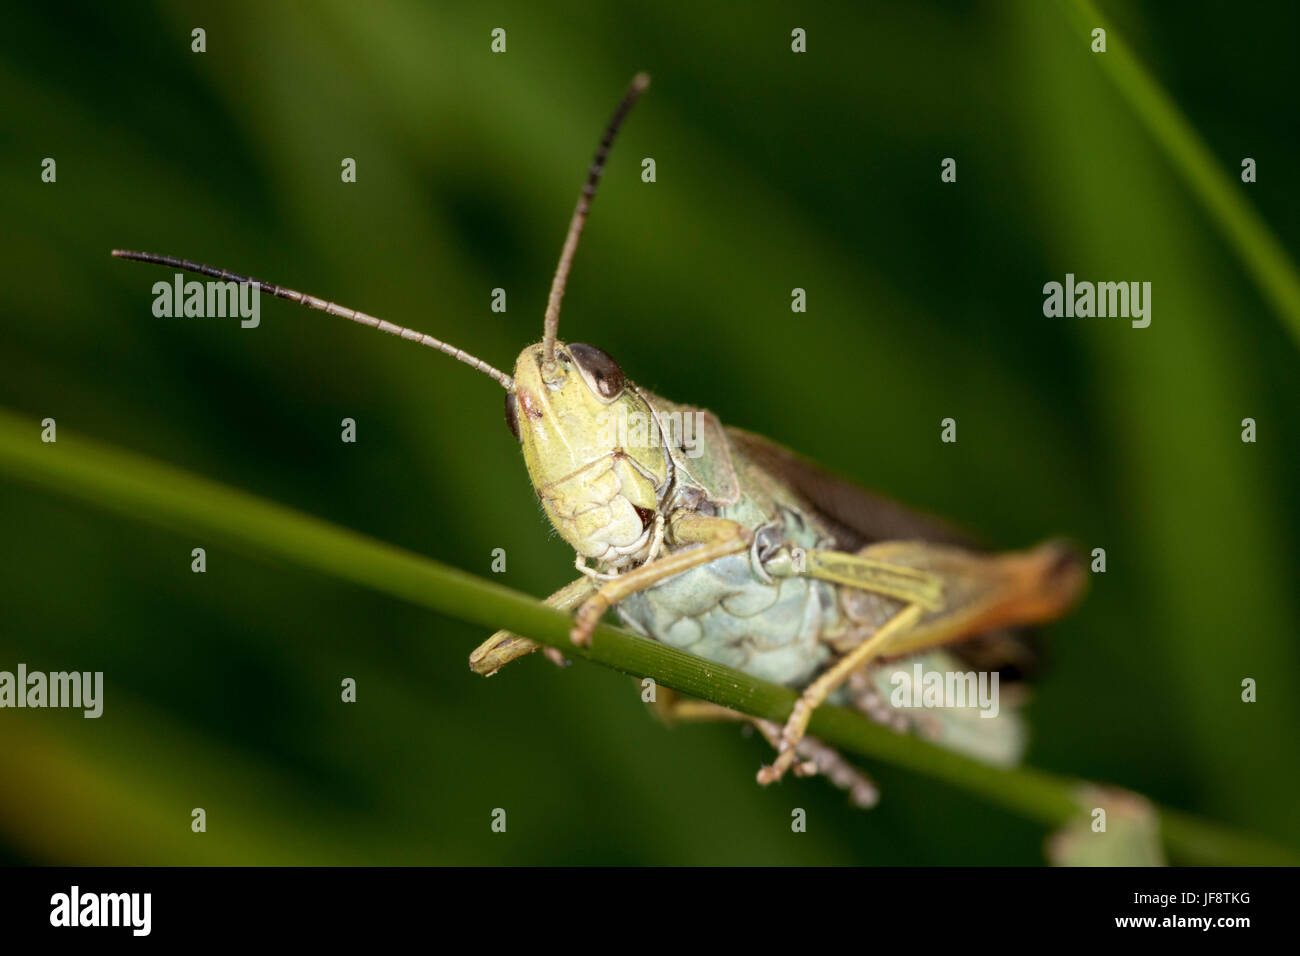 Macro portrait of the grasshoppers from the Velebit mountain, Croatia Stock Photo